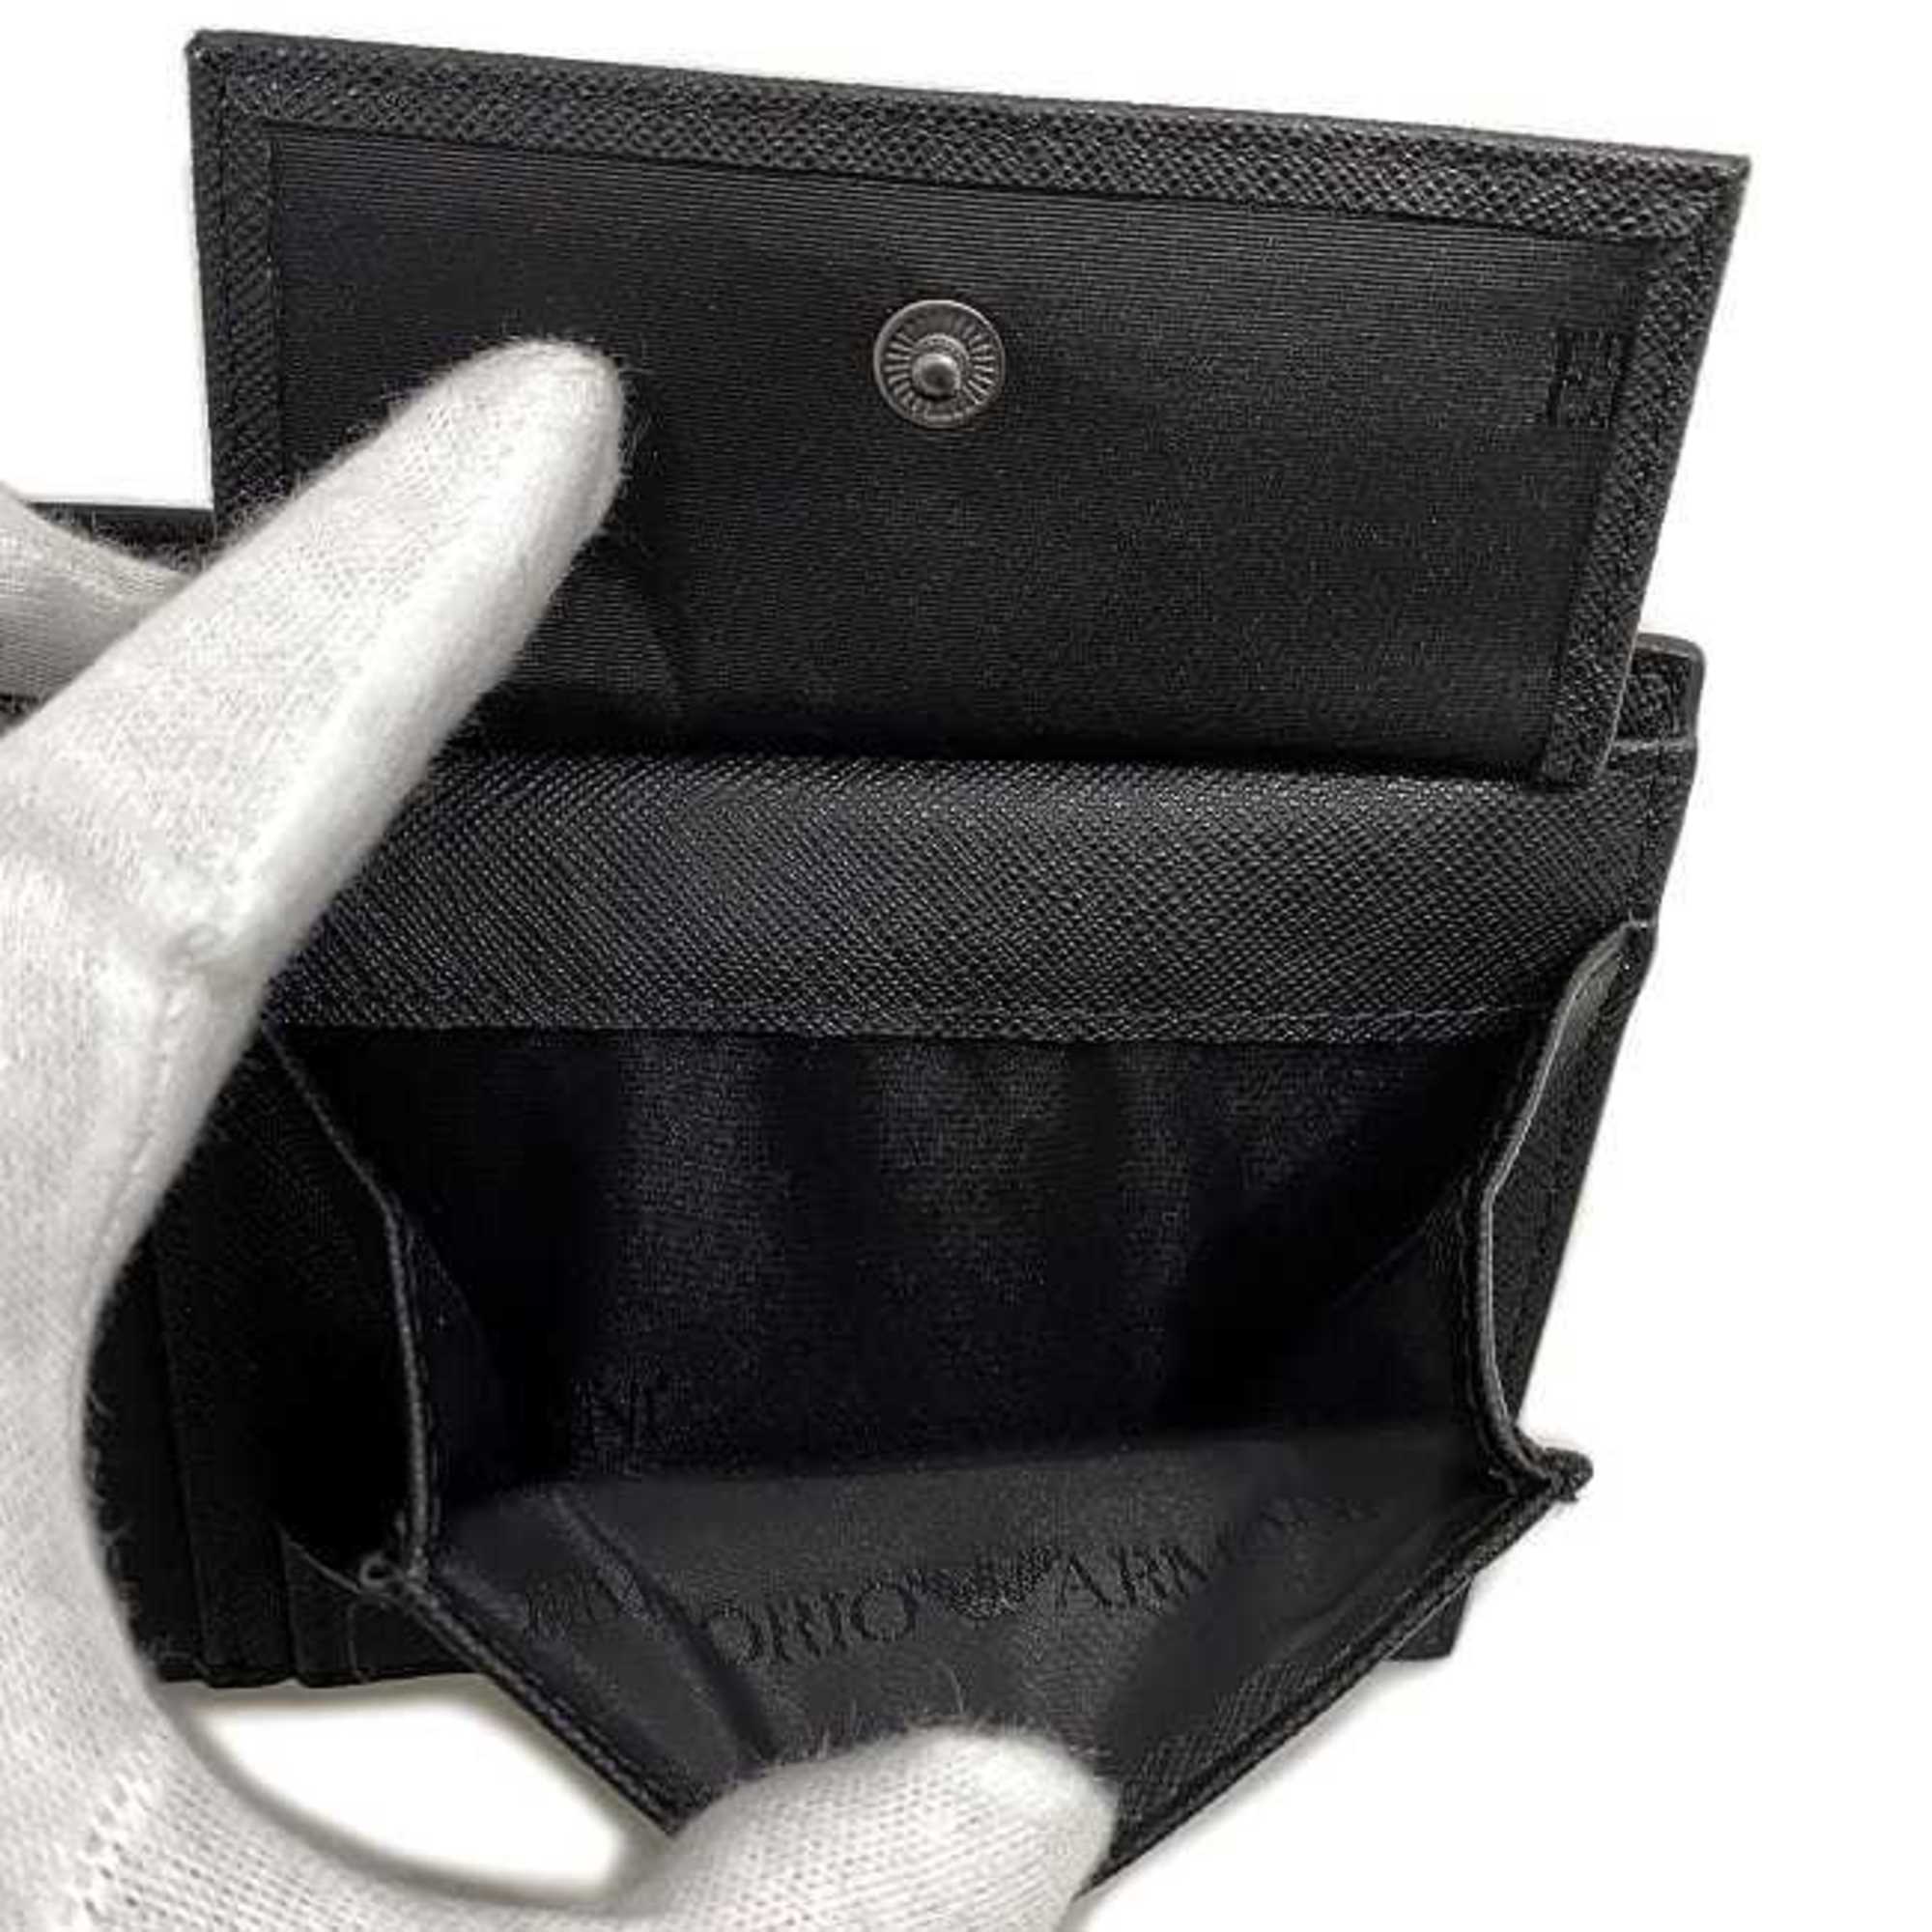 Emporio Armani folio wallet black white Y4R165 leather EMPORIO ARMANI men's